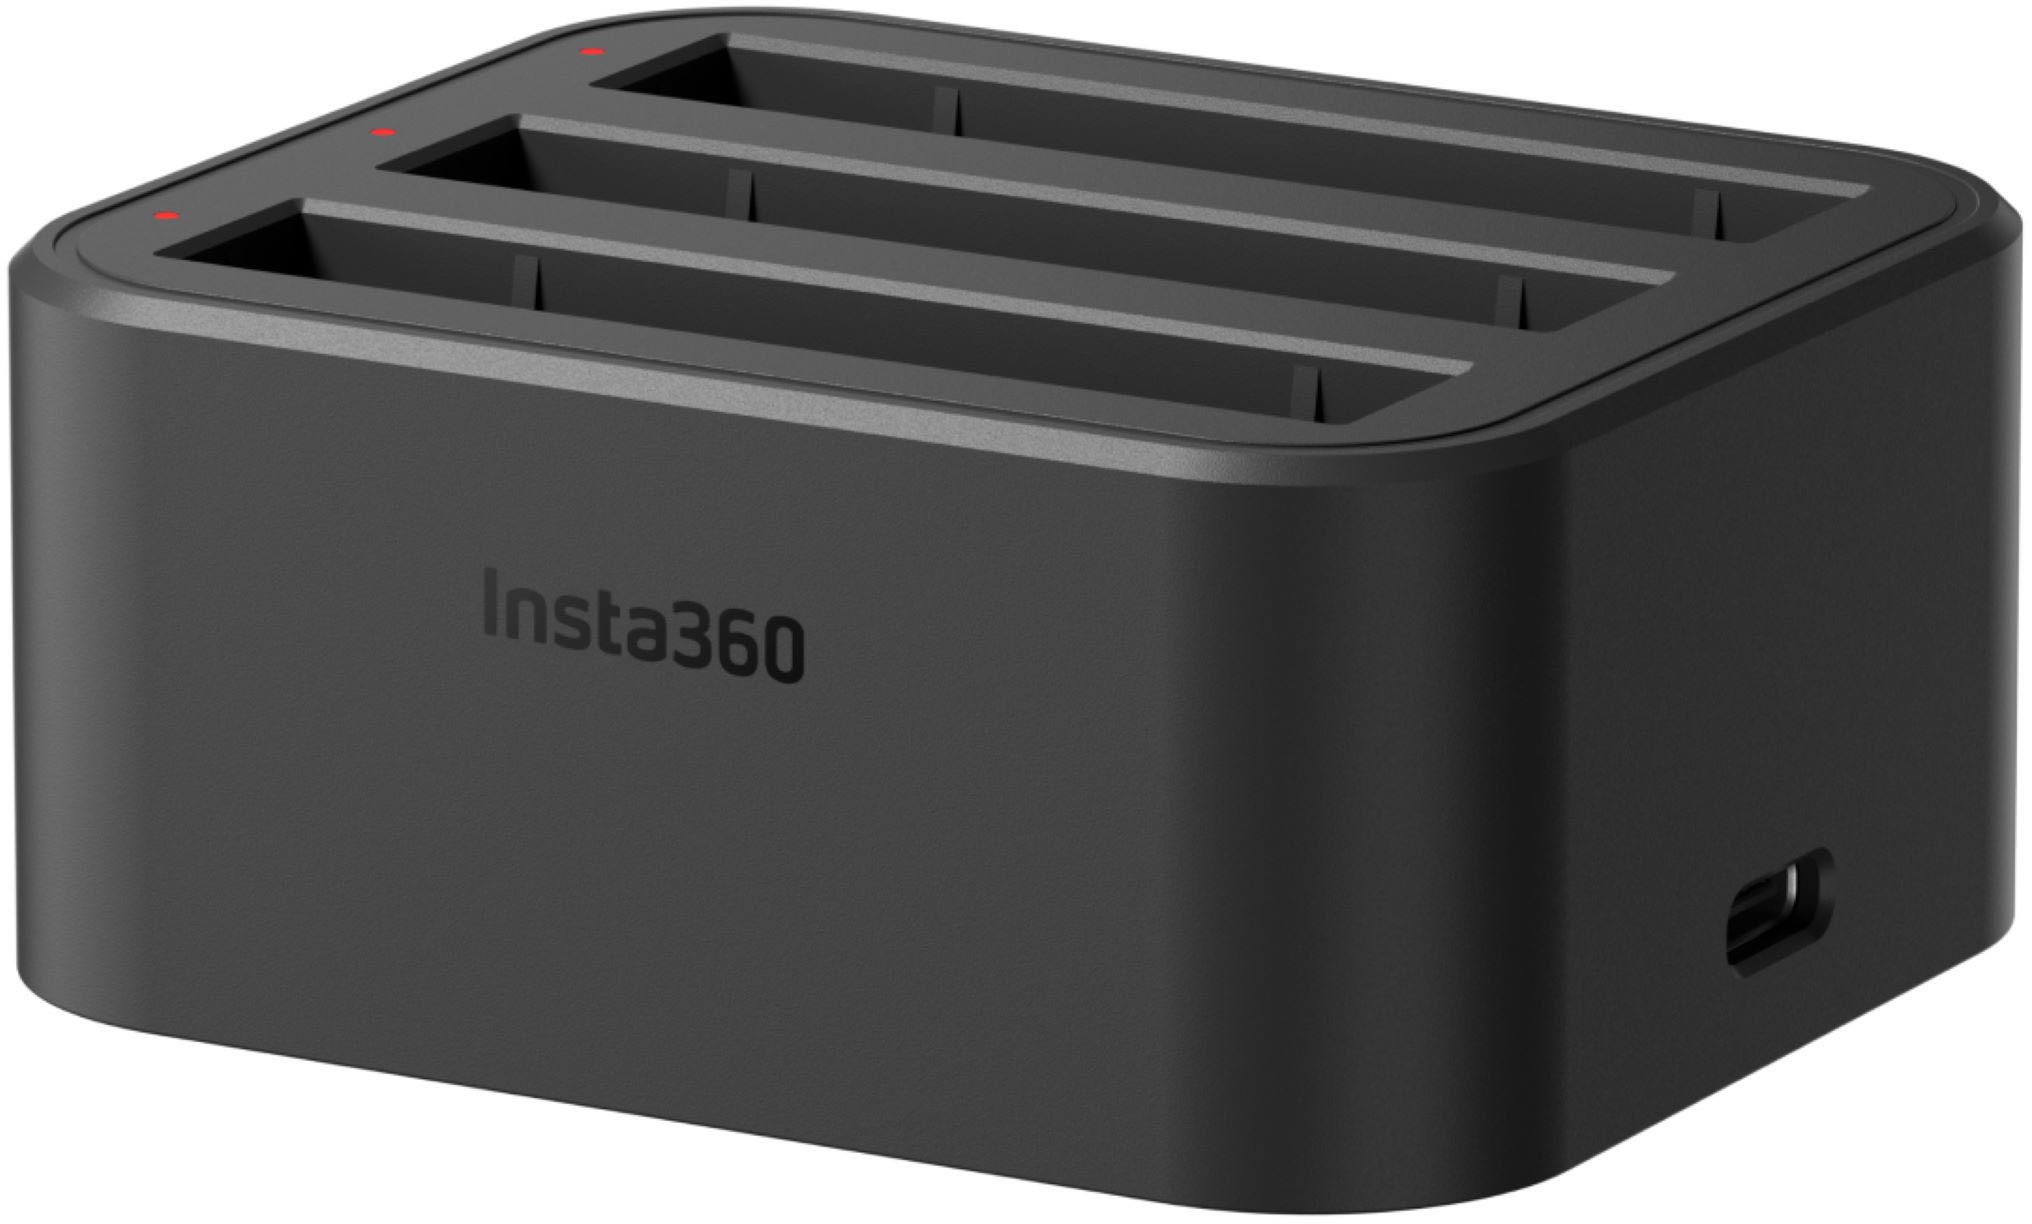 Insta360 X3 Battery & Fast Charge Hub Bundle